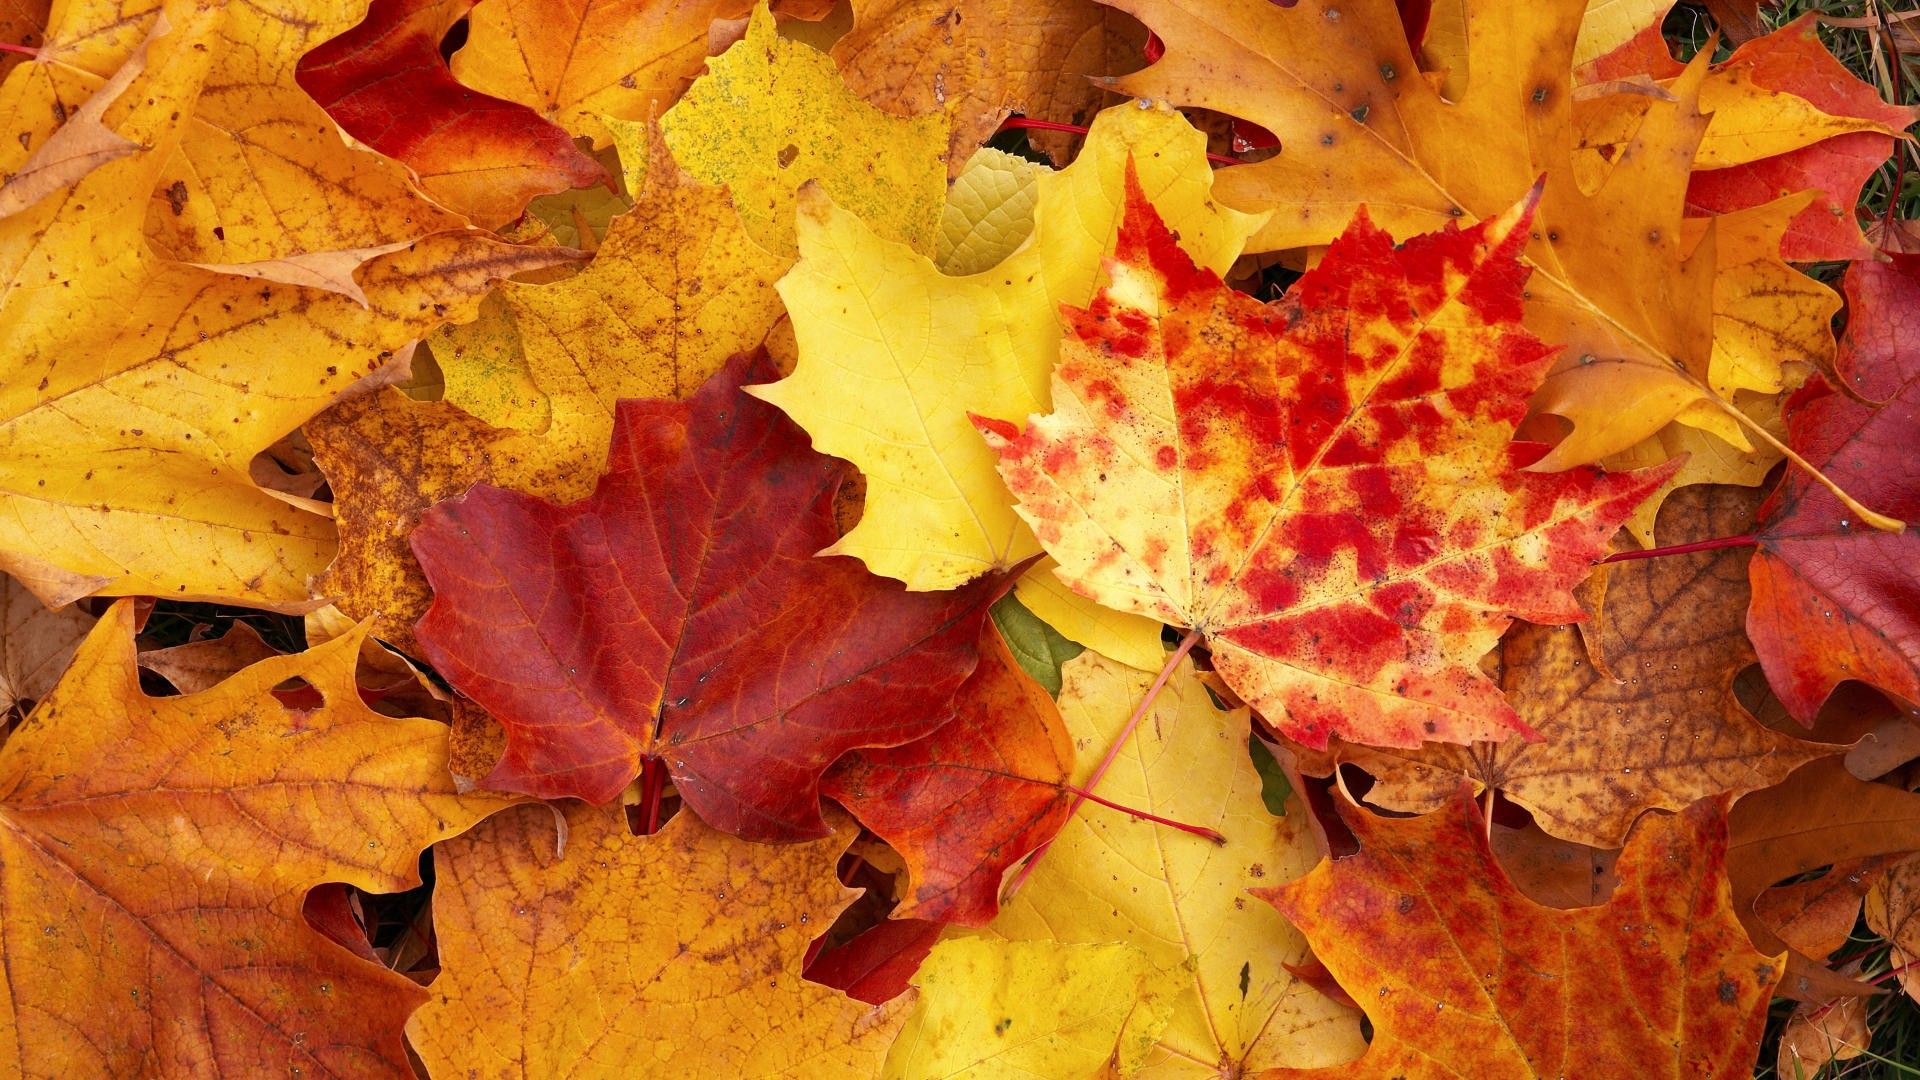 Autumn - Simple English Wikipedia, the free encyclopedia